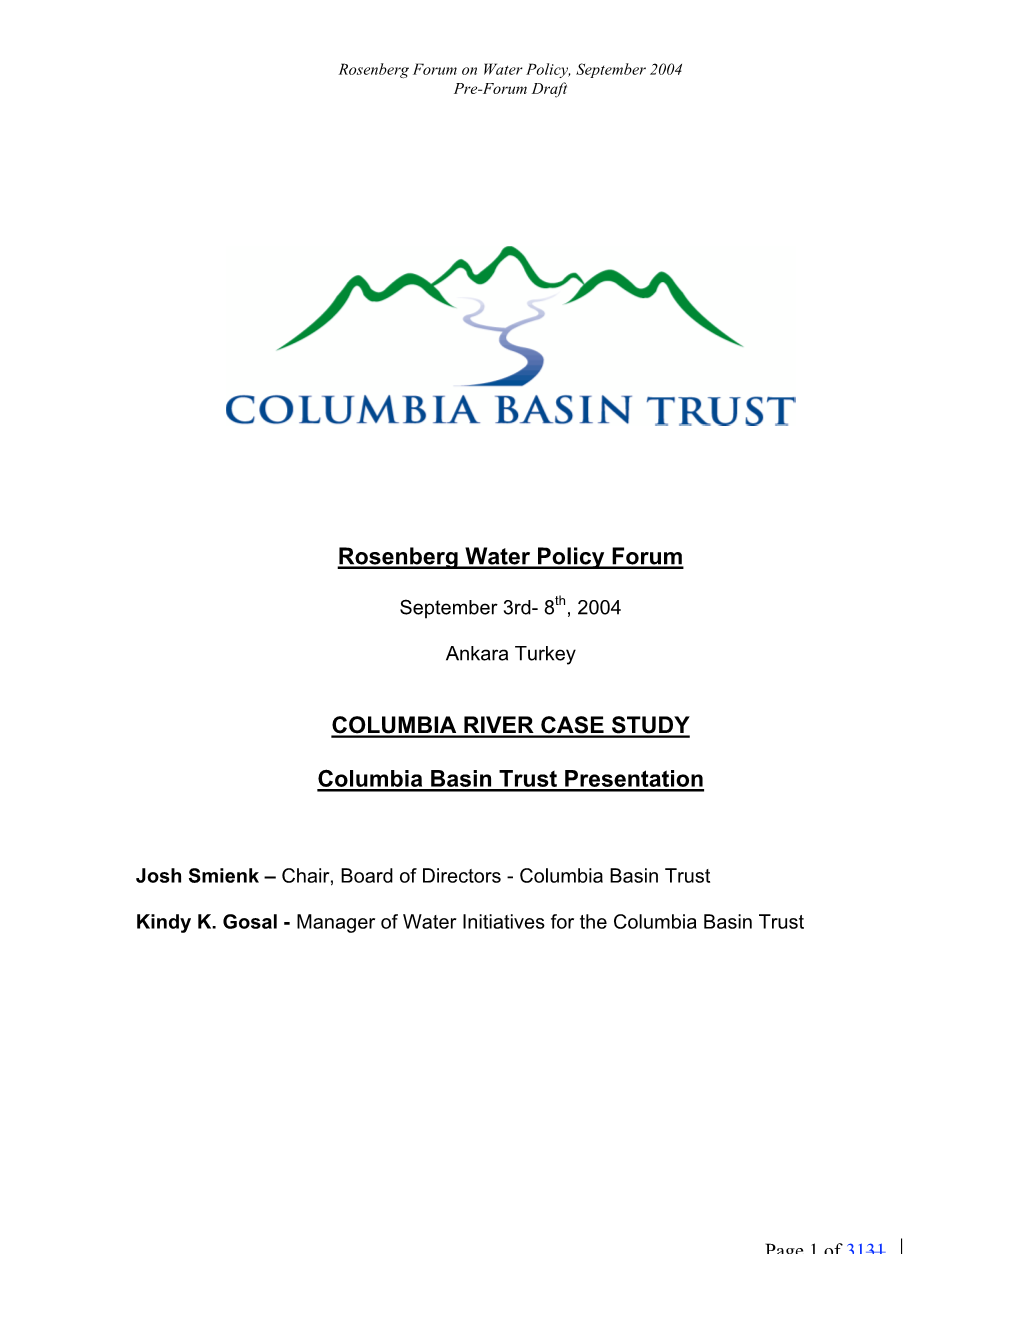 Columbia Basin Trust, Columbia River Case Study, (PDF)